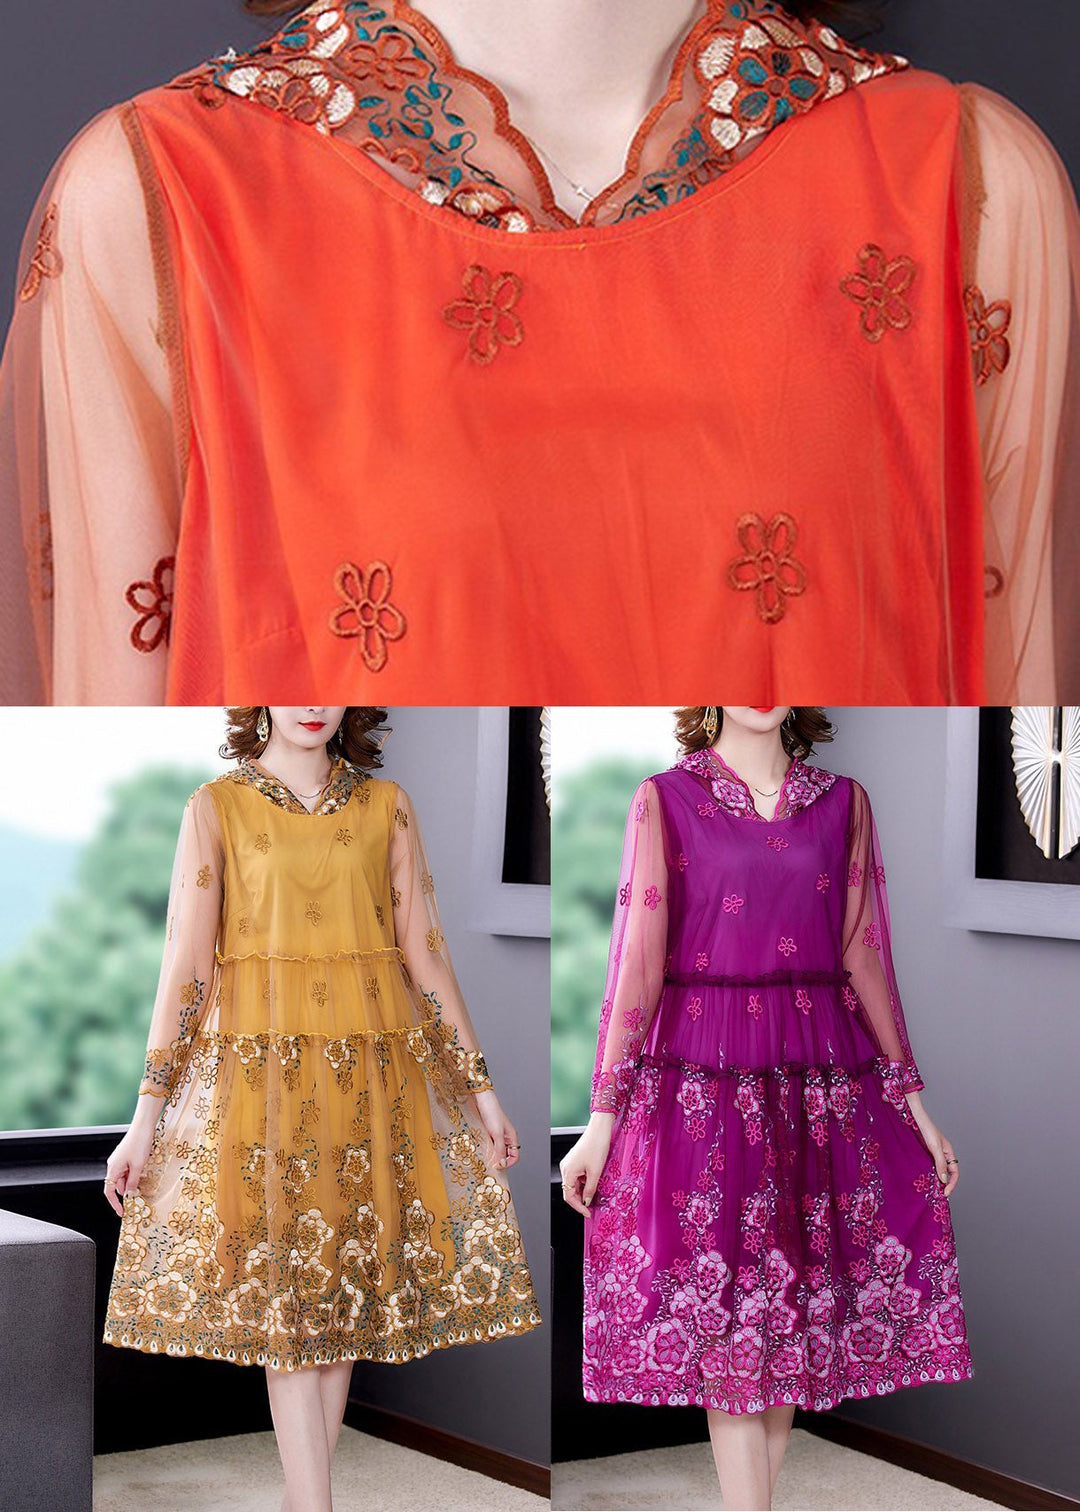 Vogue Orange Embroideried Floral Tulle Hooded Long Dresses Spring